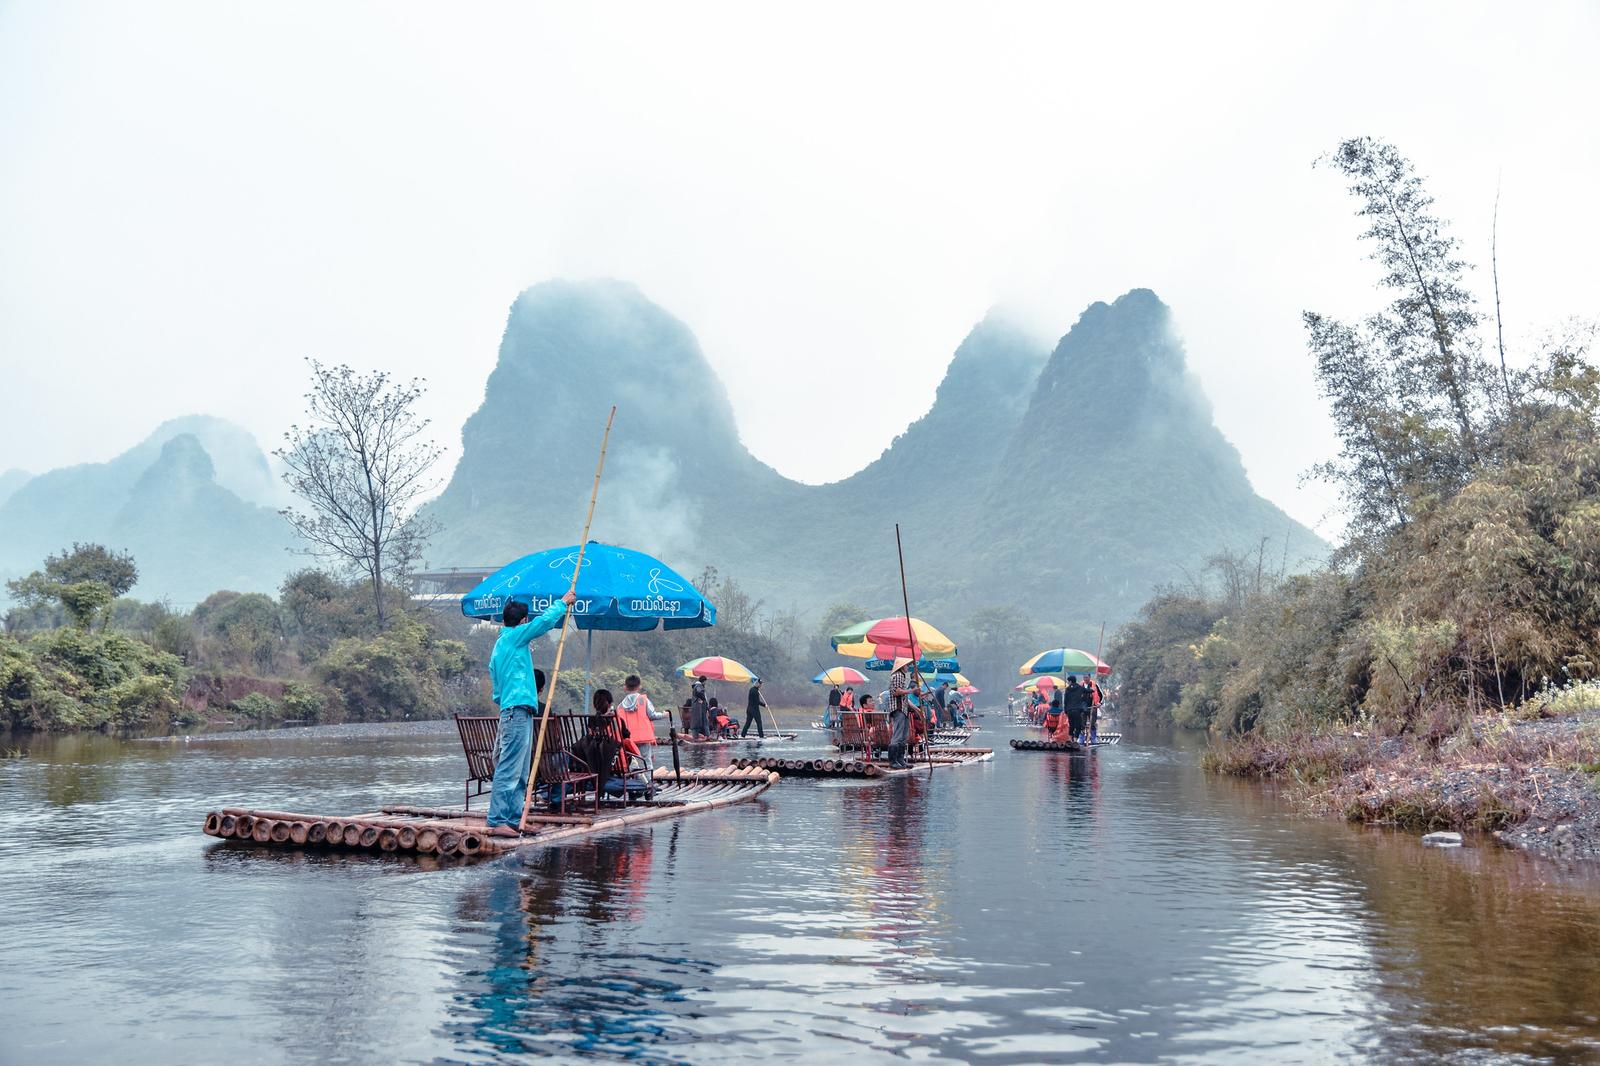 Bamboo Rafting on Yulong River